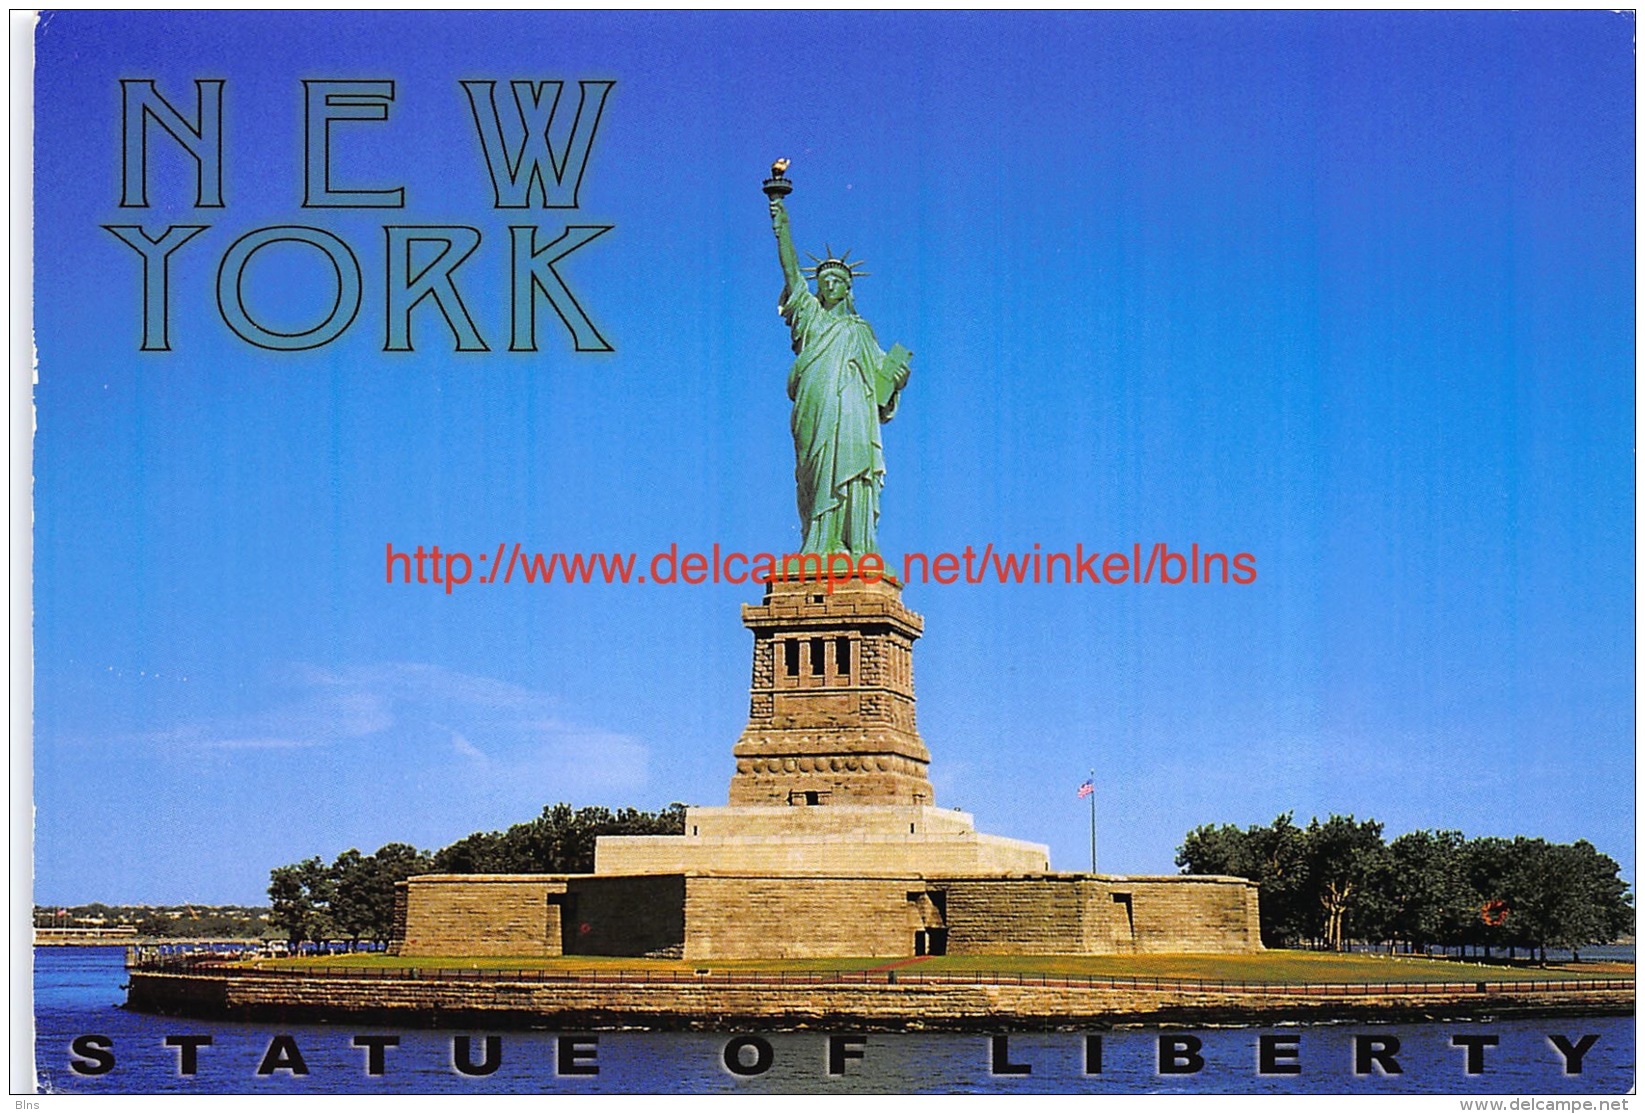 Statue Of Liberty - New York City - Statue Of Liberty